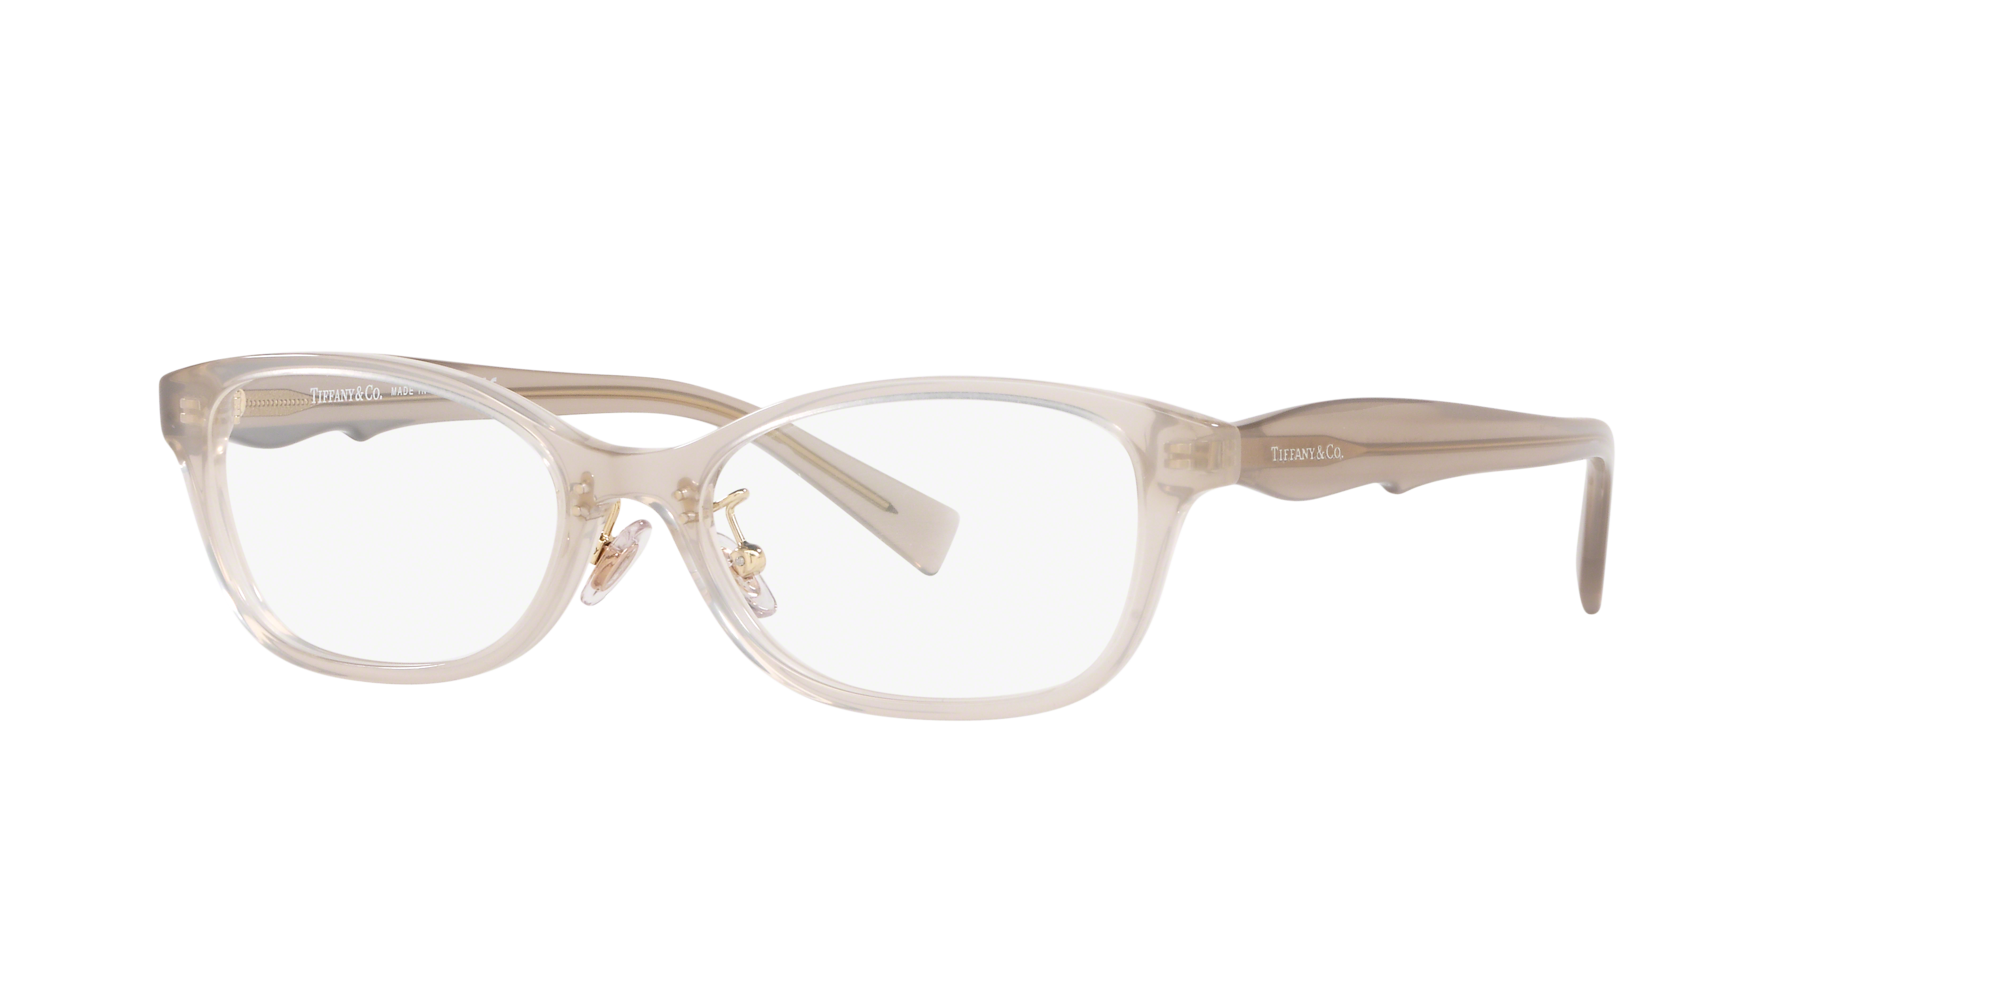 tiffany glasses frames opsm